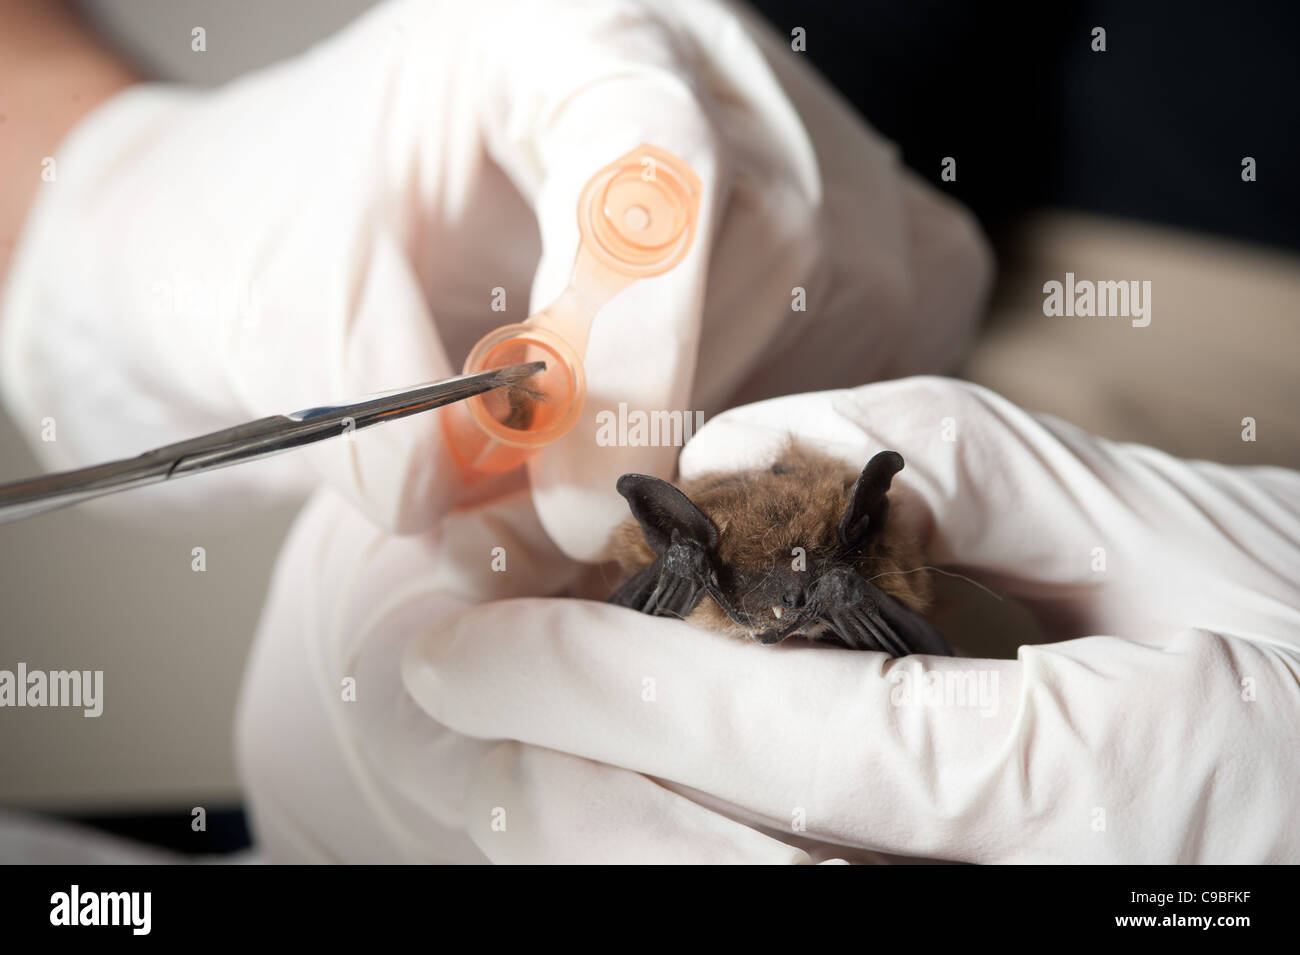 Scientist examining a bat in a wildlife lab Stock Photo